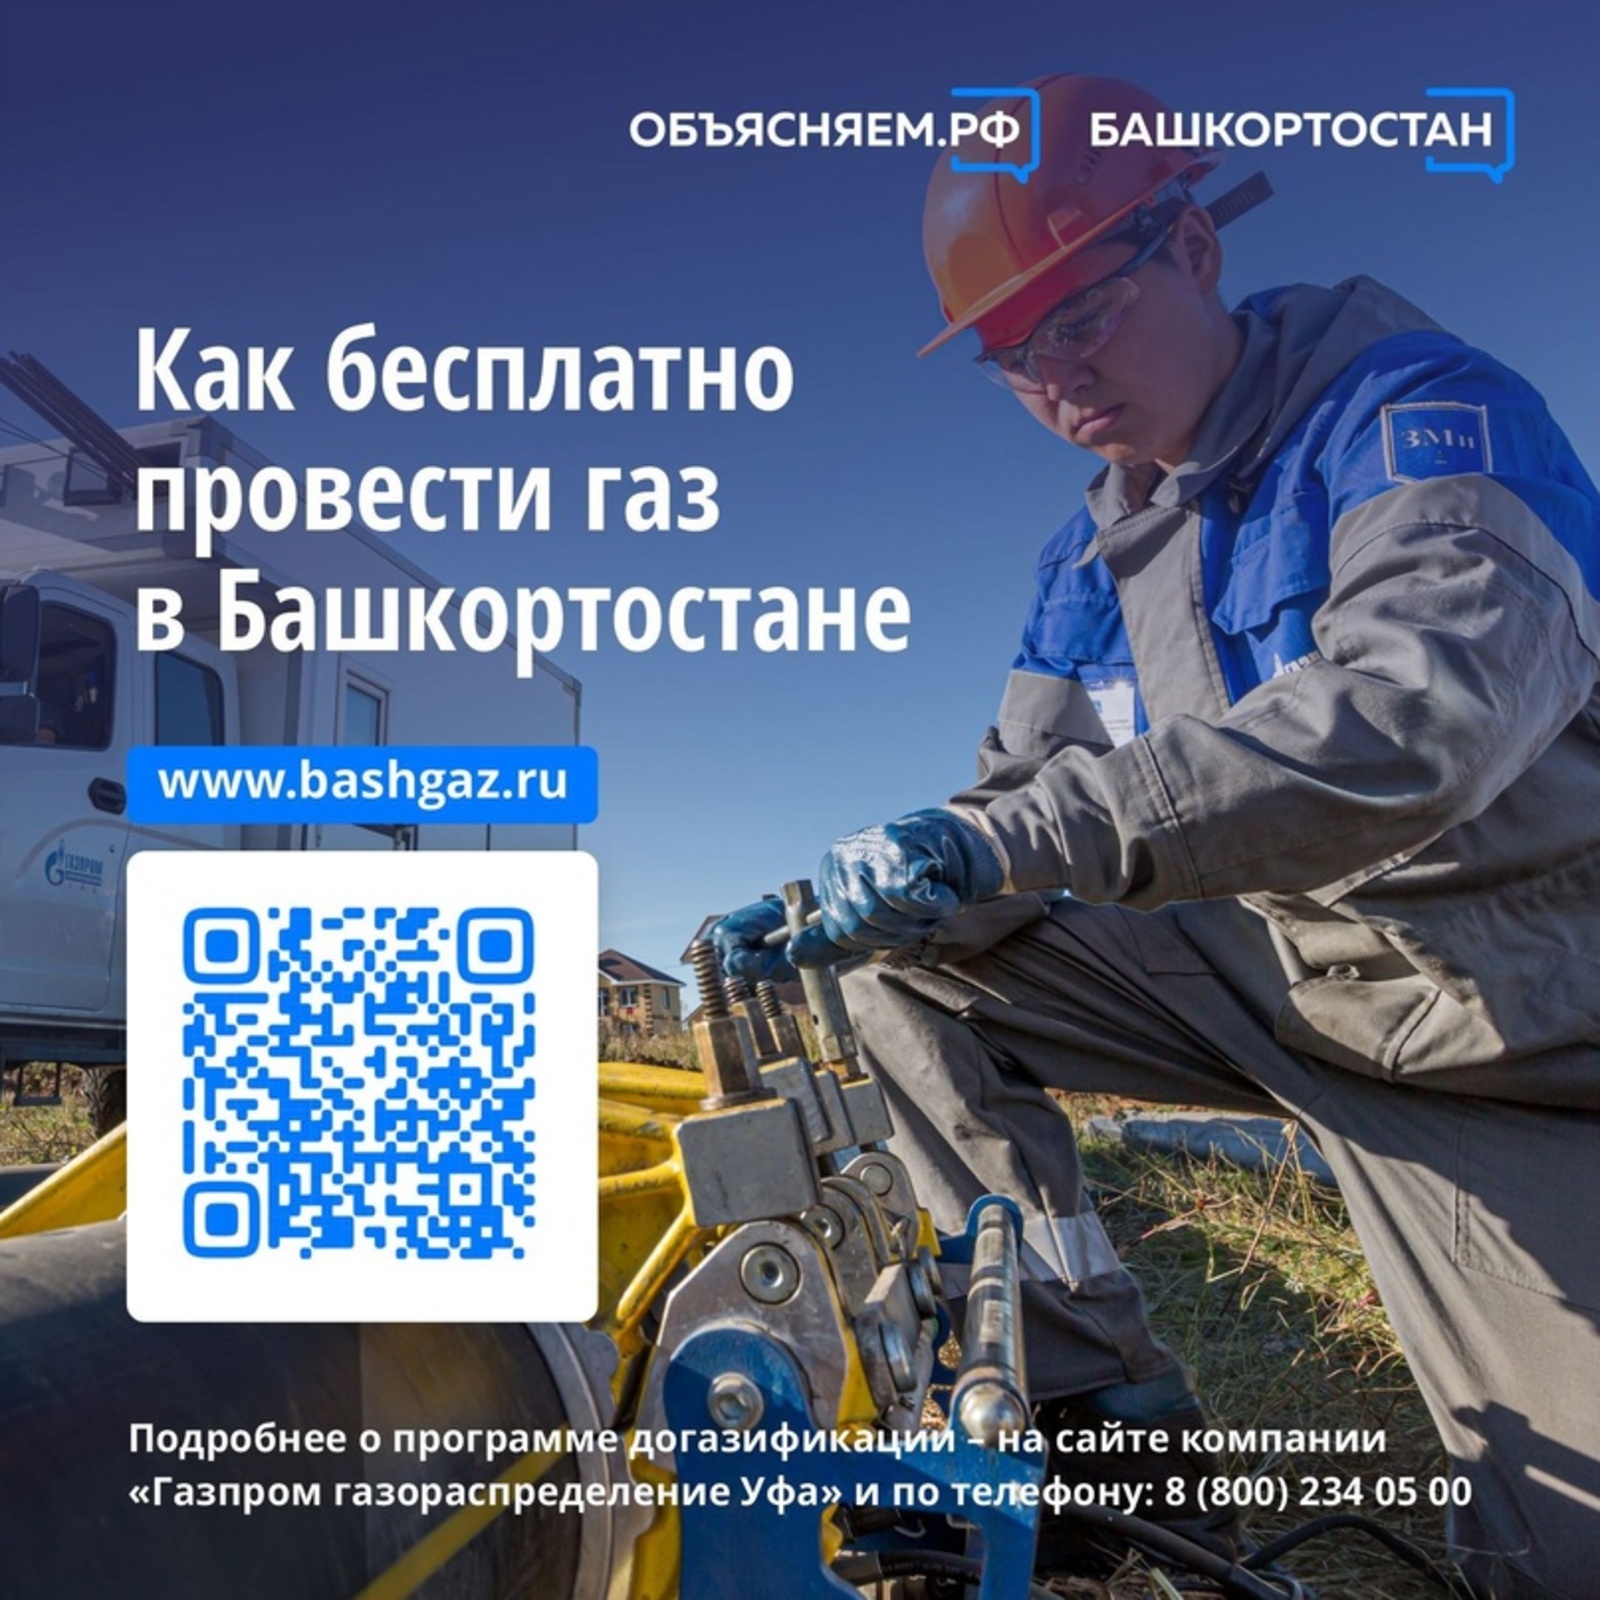 Жители Башкирии могут бесплатно провести газ